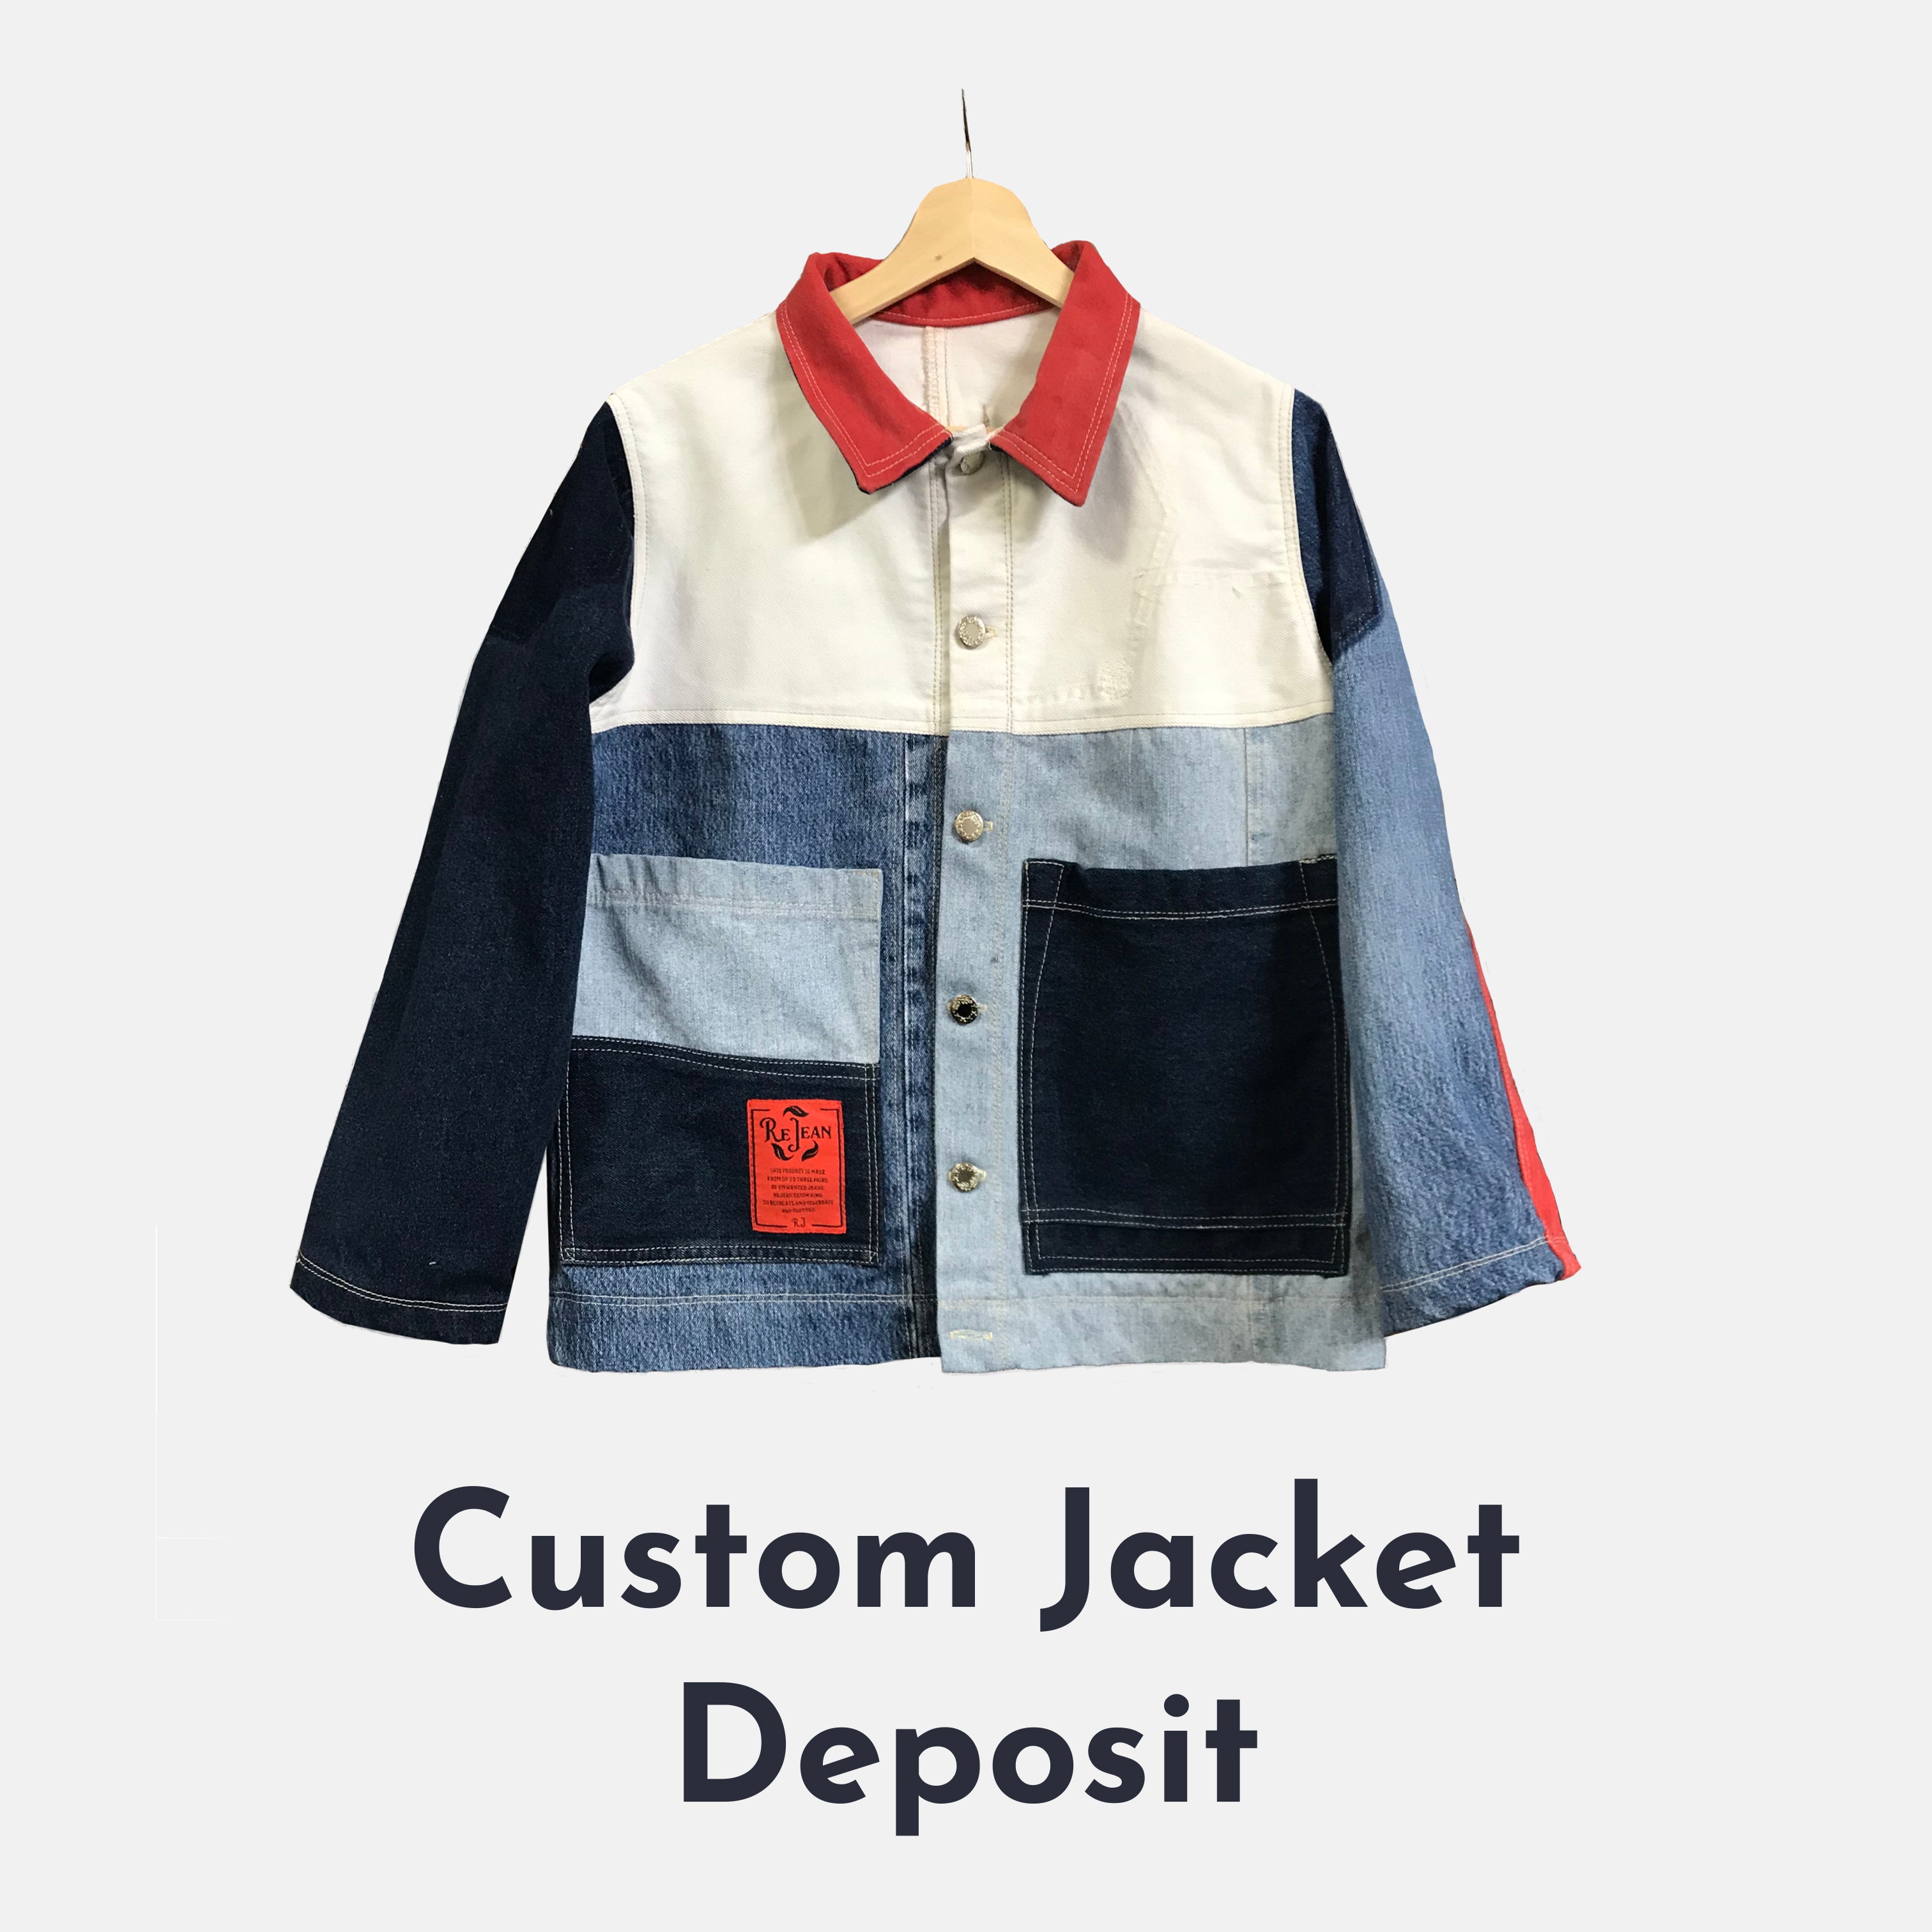 Custom Jacket - Deposit - ReJean Denim - zero waste - circular fashion brand 